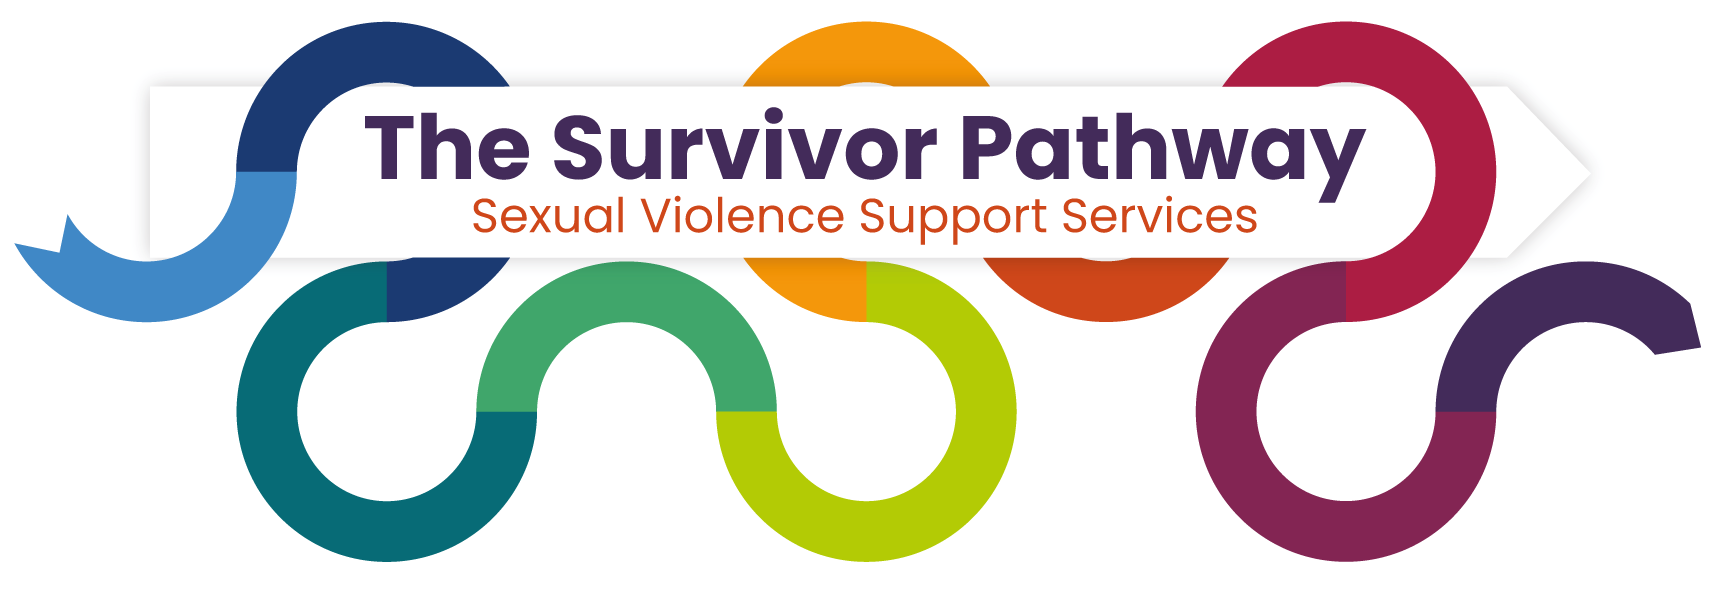 The Survivor Pathway logo